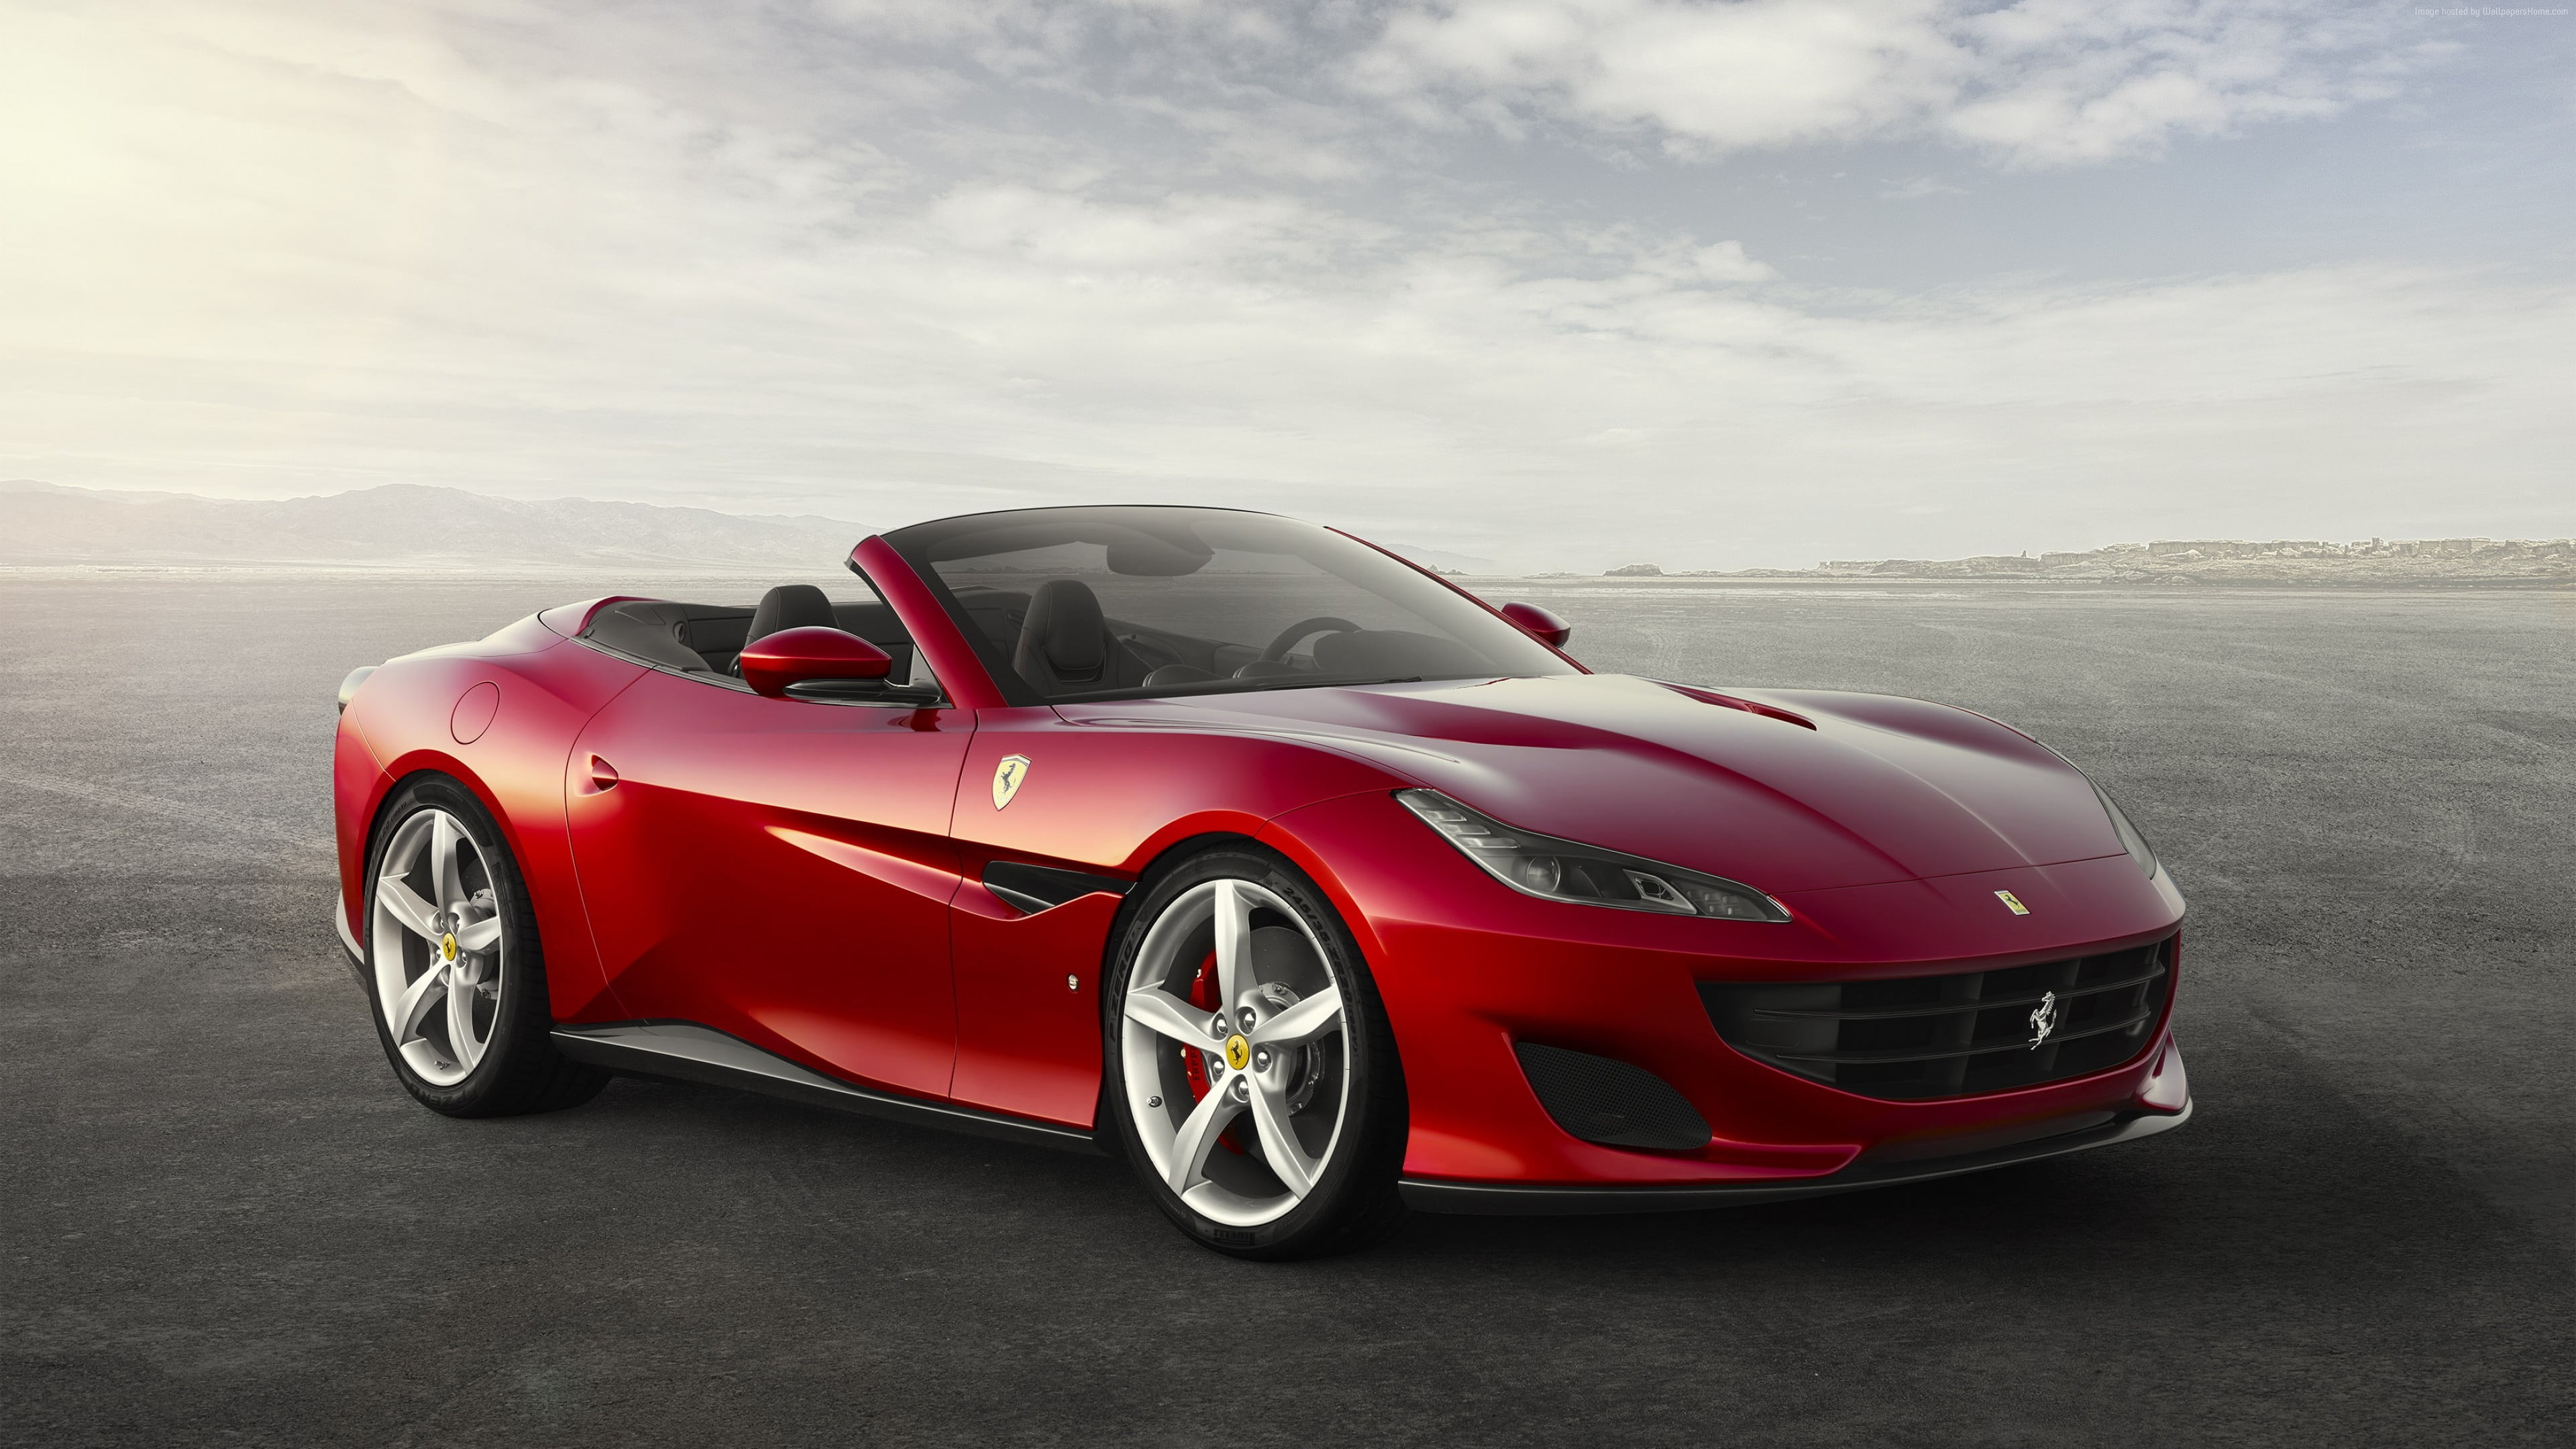 Ferrari California T, Red convertible coupe, High-definition photo, Auto beauty, 3840x2160 4K Desktop